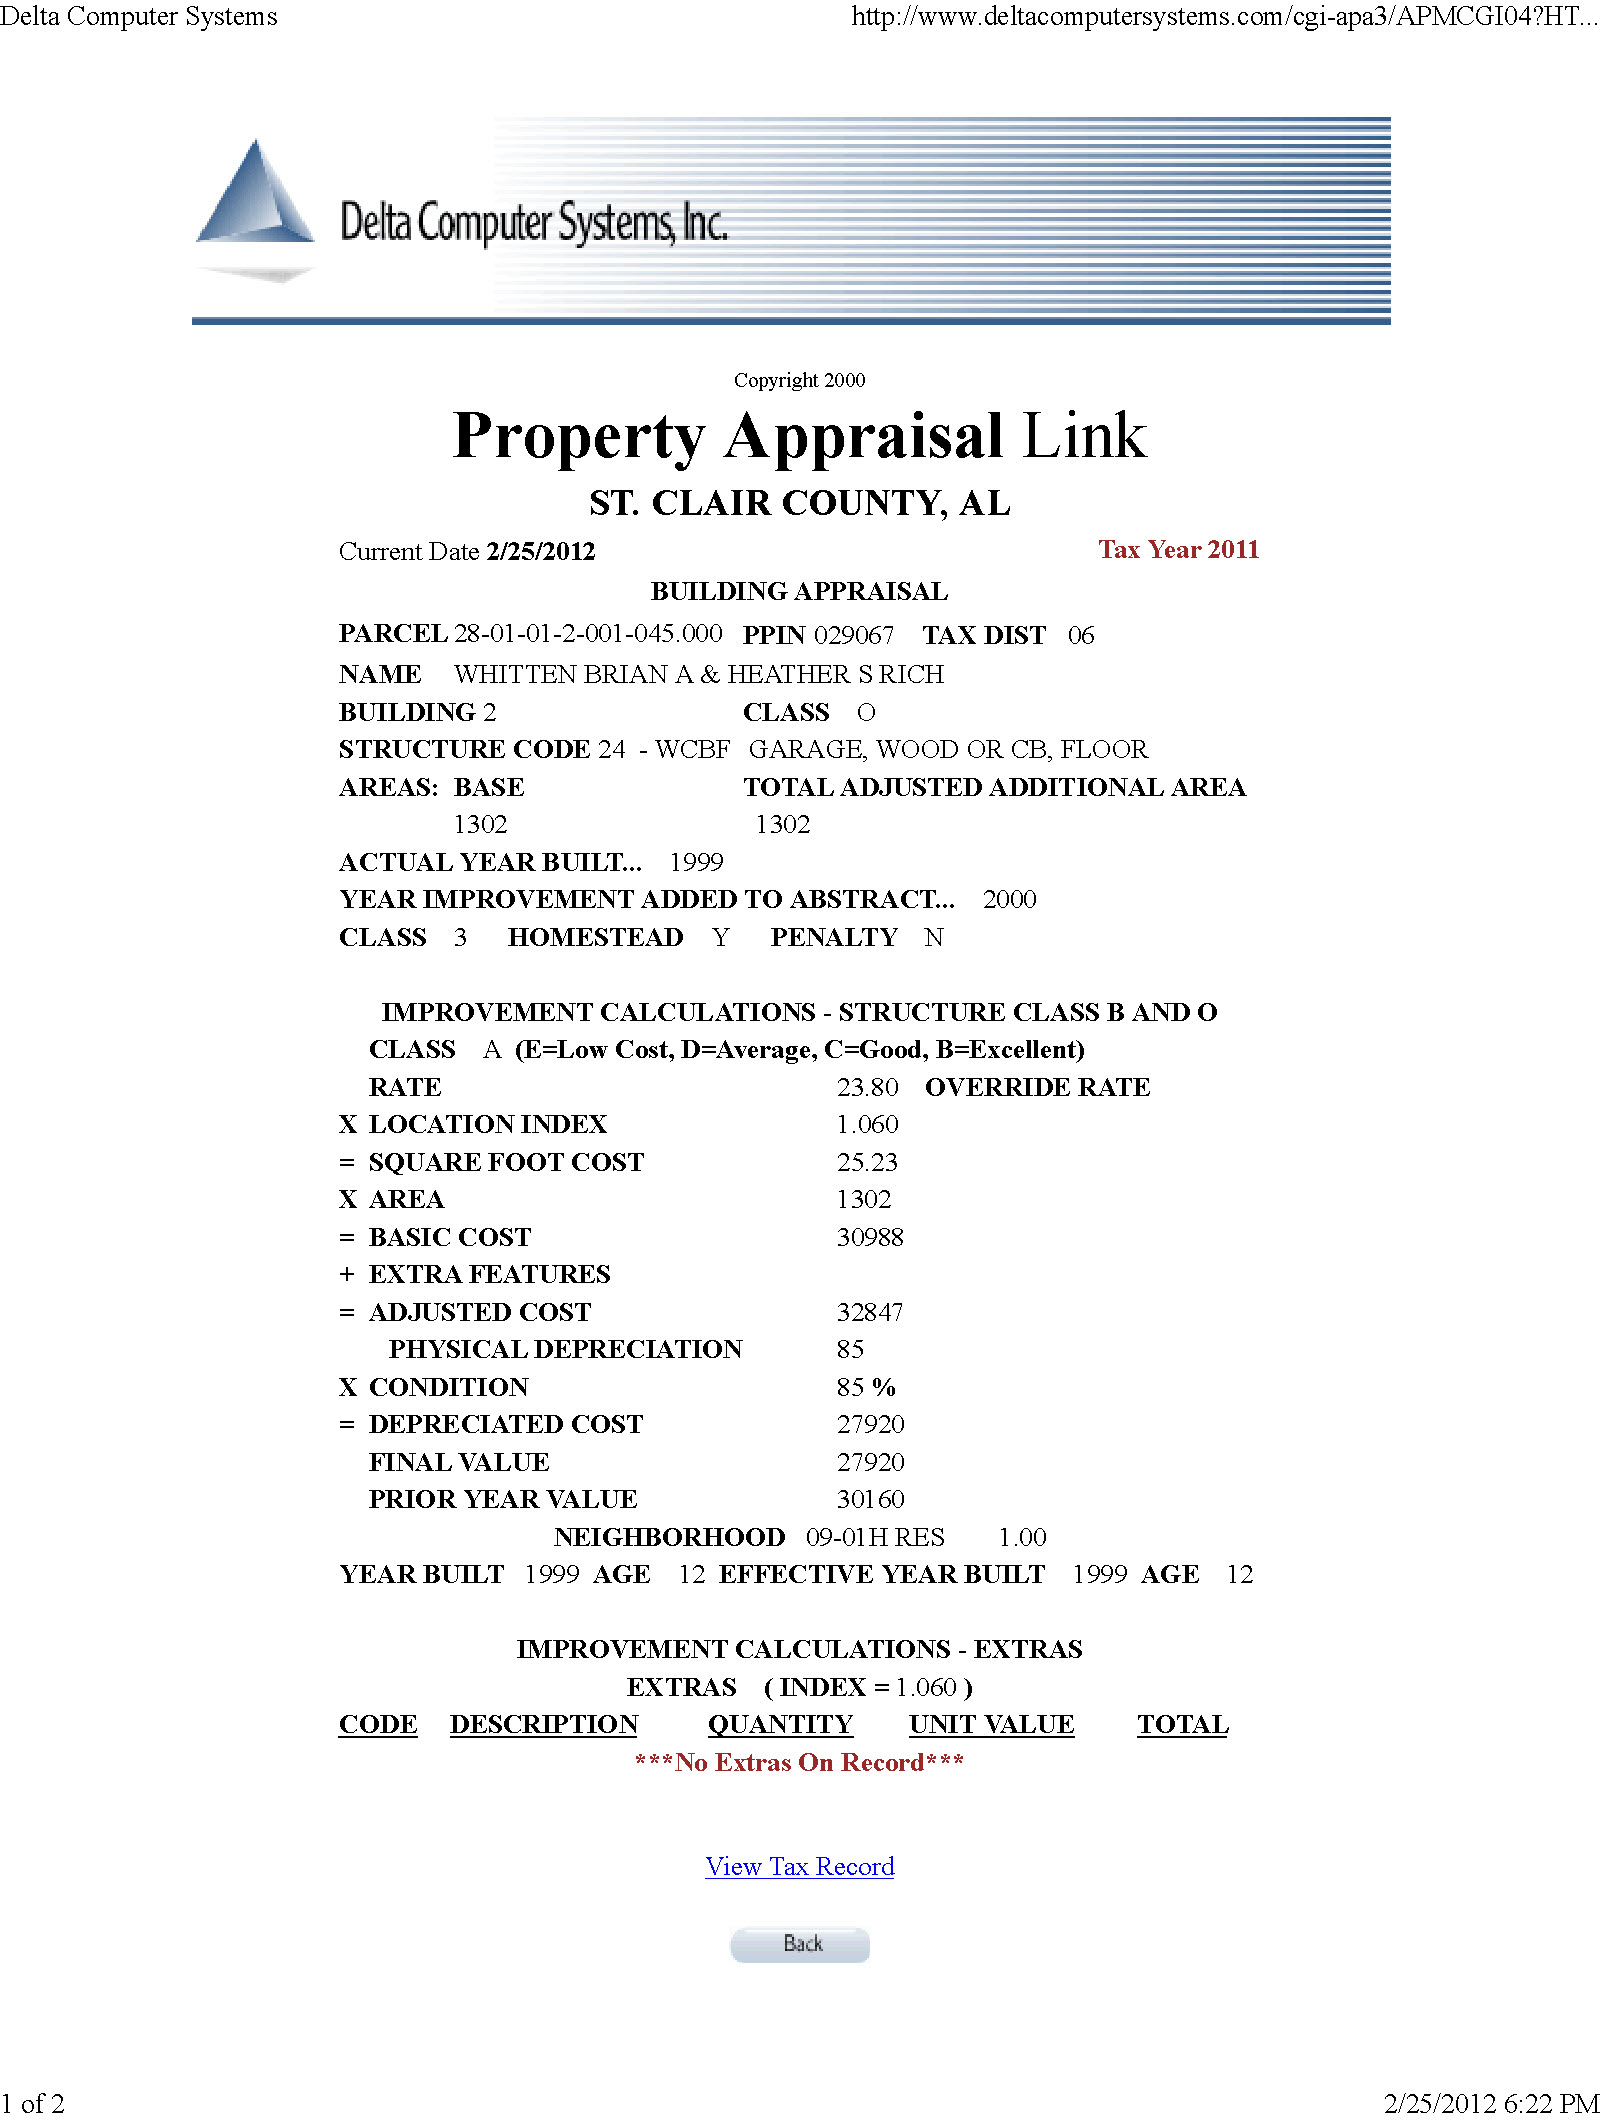 Copy of Copy of Copy of whitten heather property tax info 51.jpg